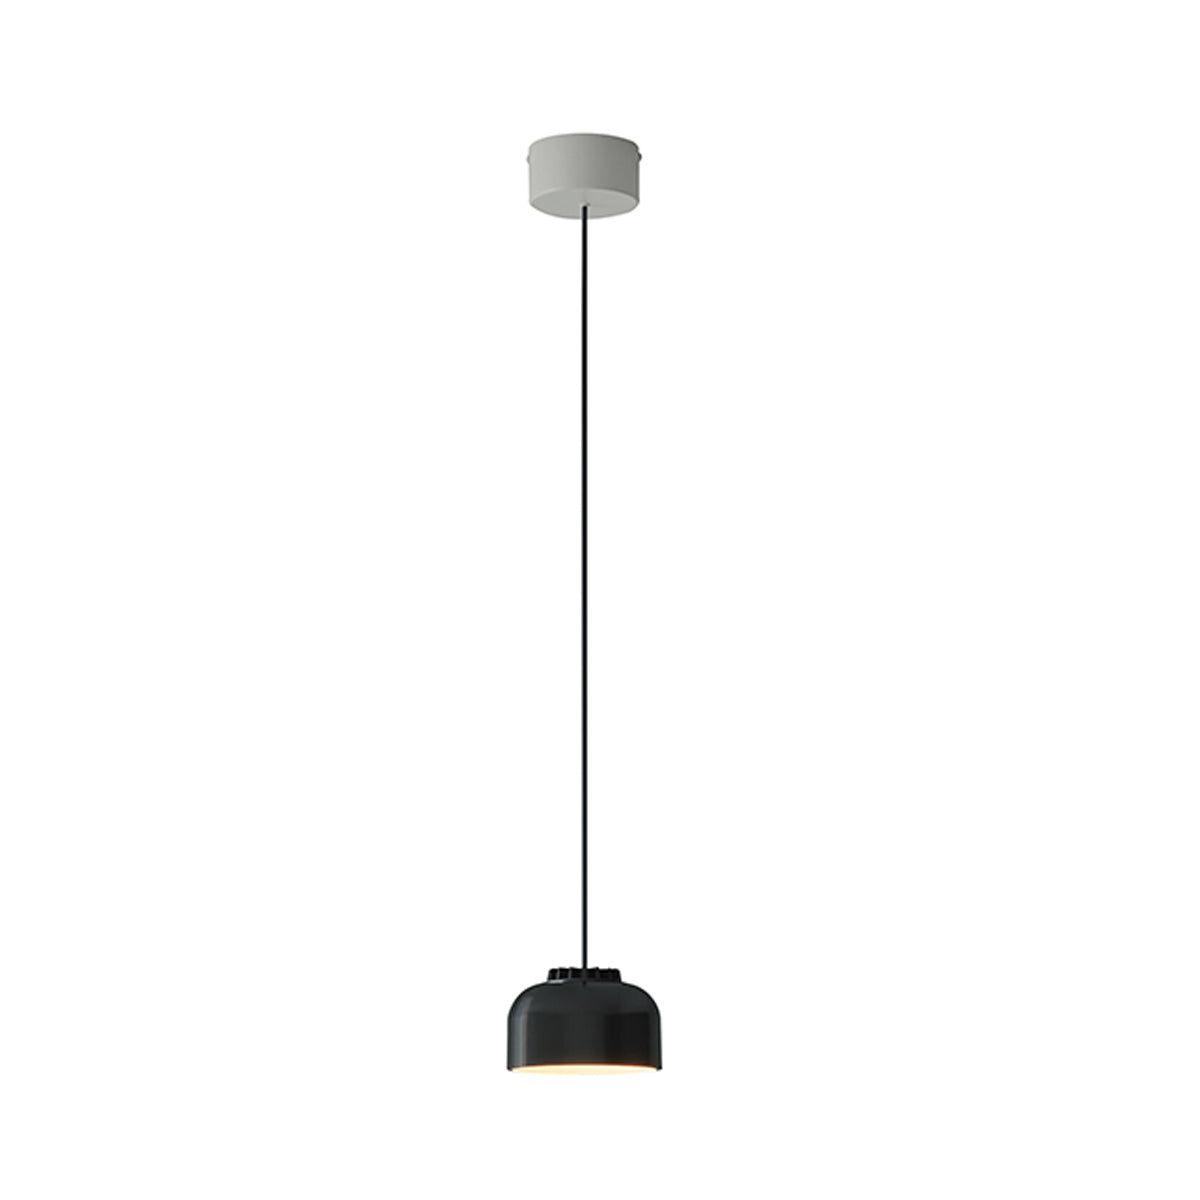 HeadHat Bowl Pendant Lamp: Small - 5.5